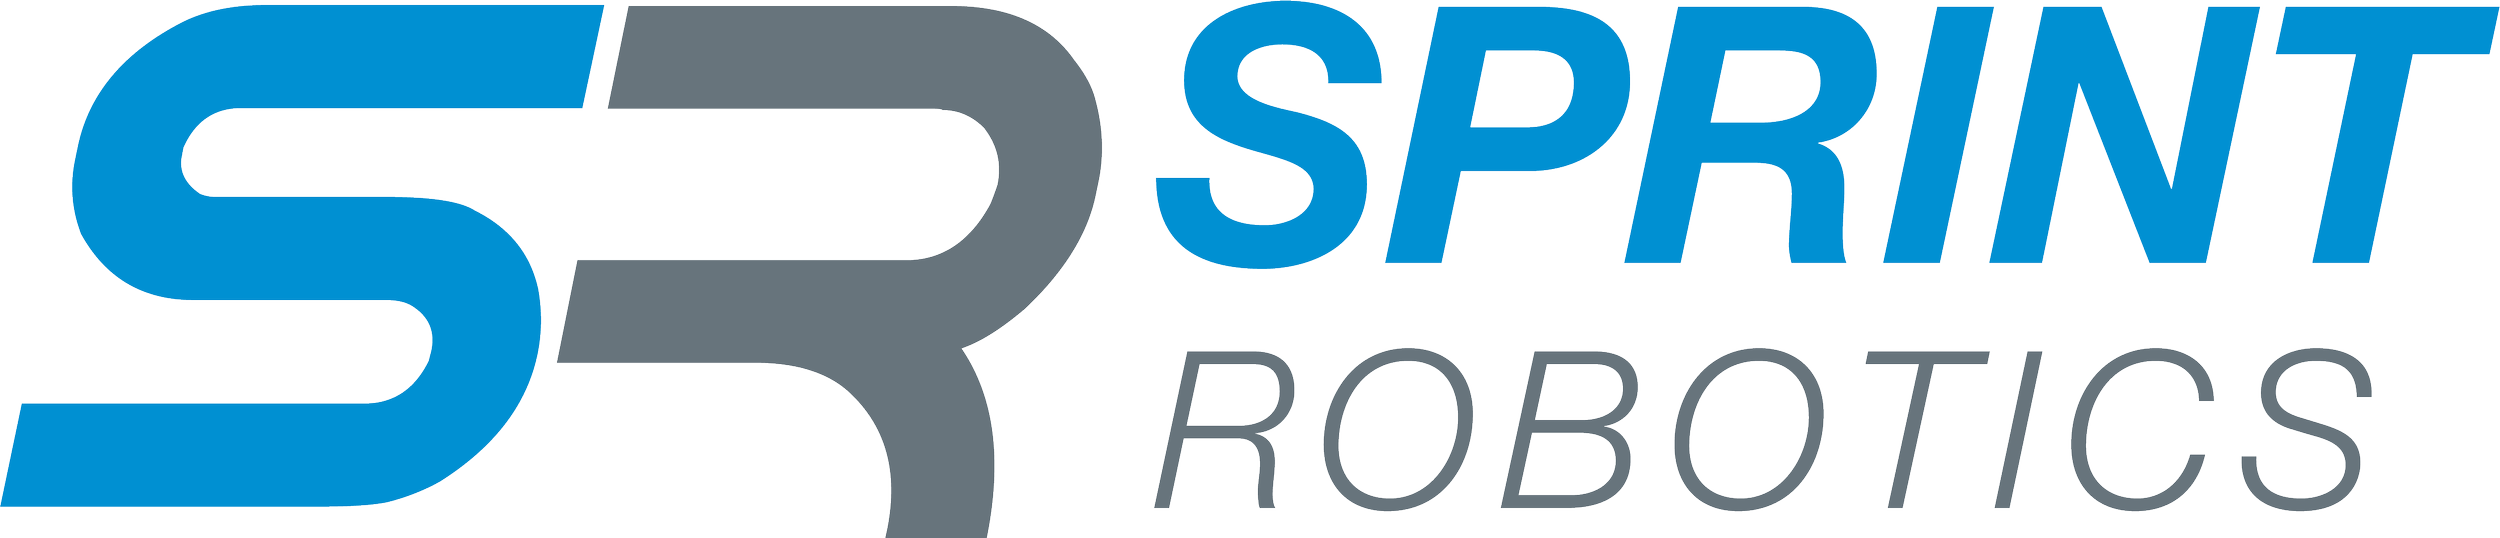 sprint-robotics.png